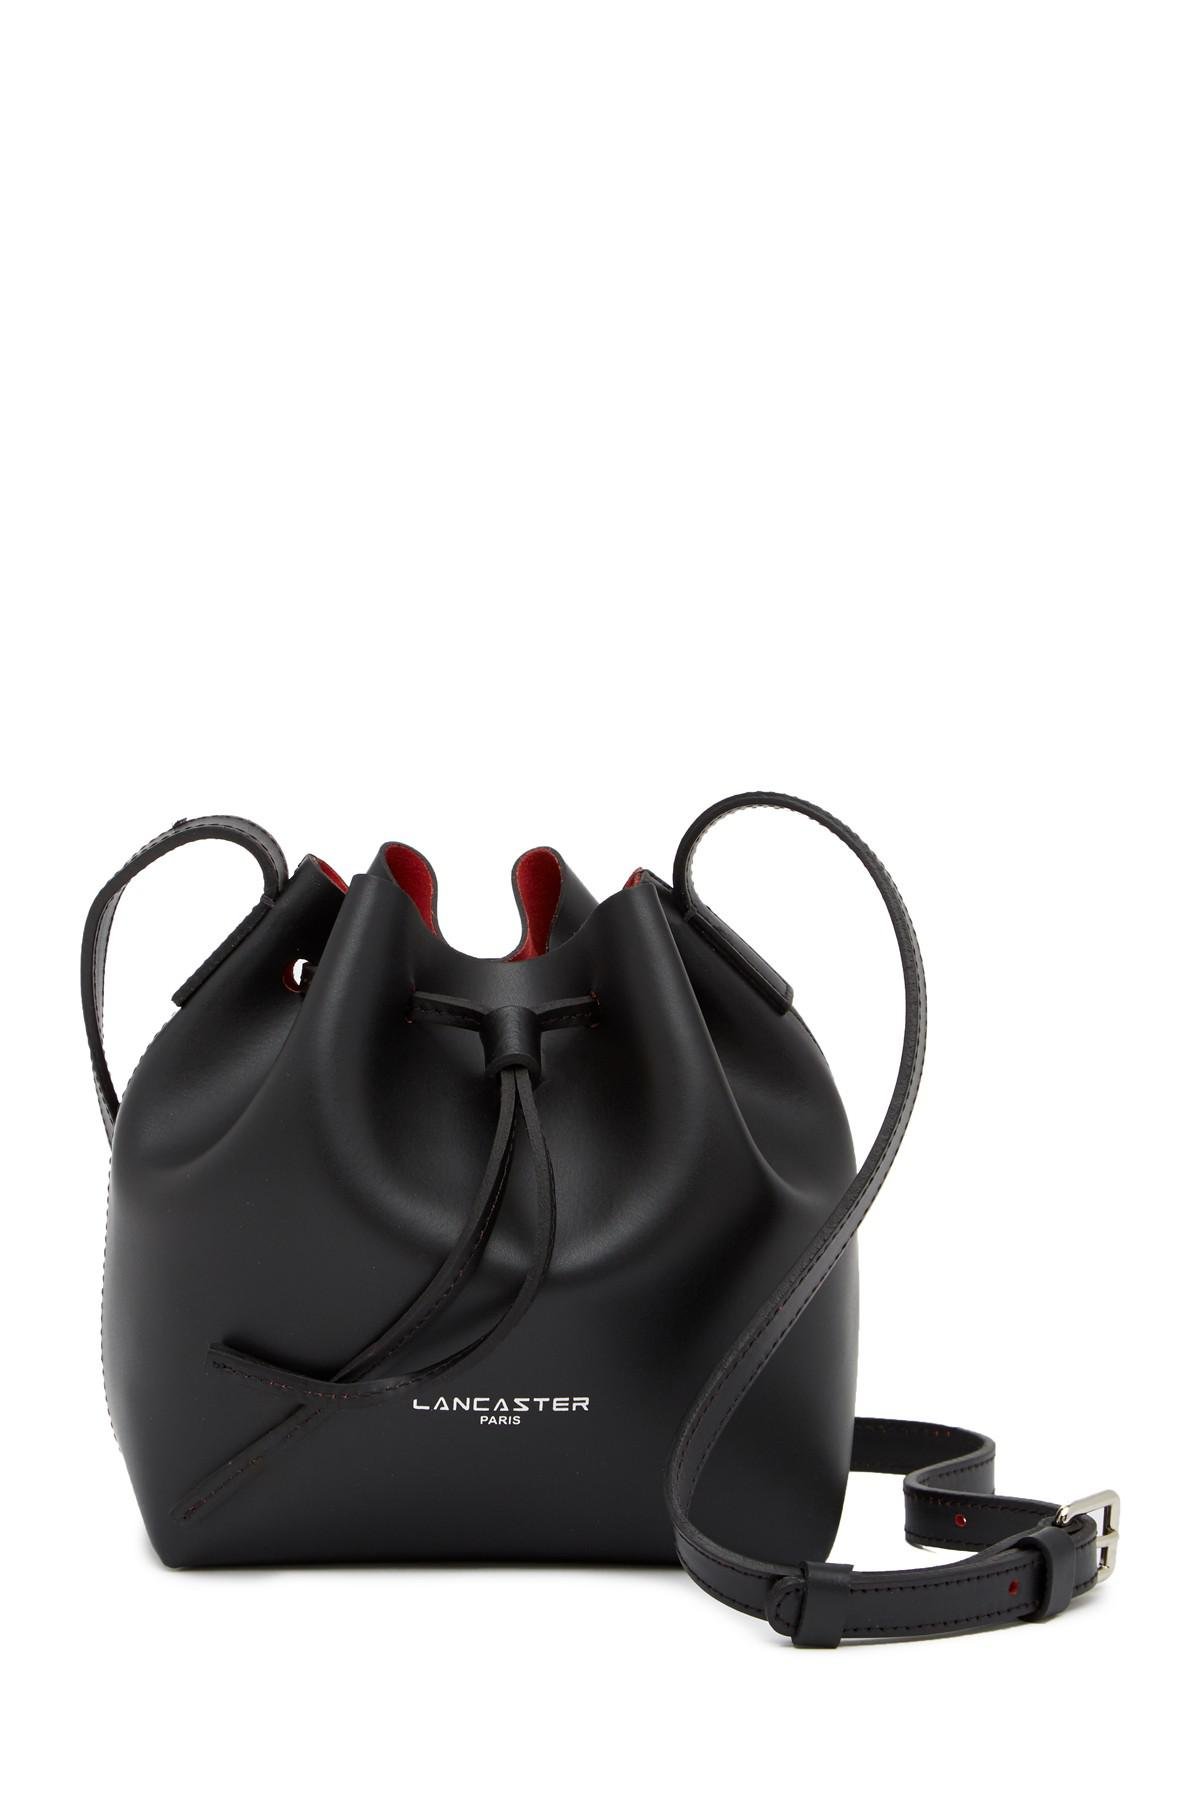 Lyst - Lancaster Paris Pur Smooth Mini Leather Bucket Bag in Black